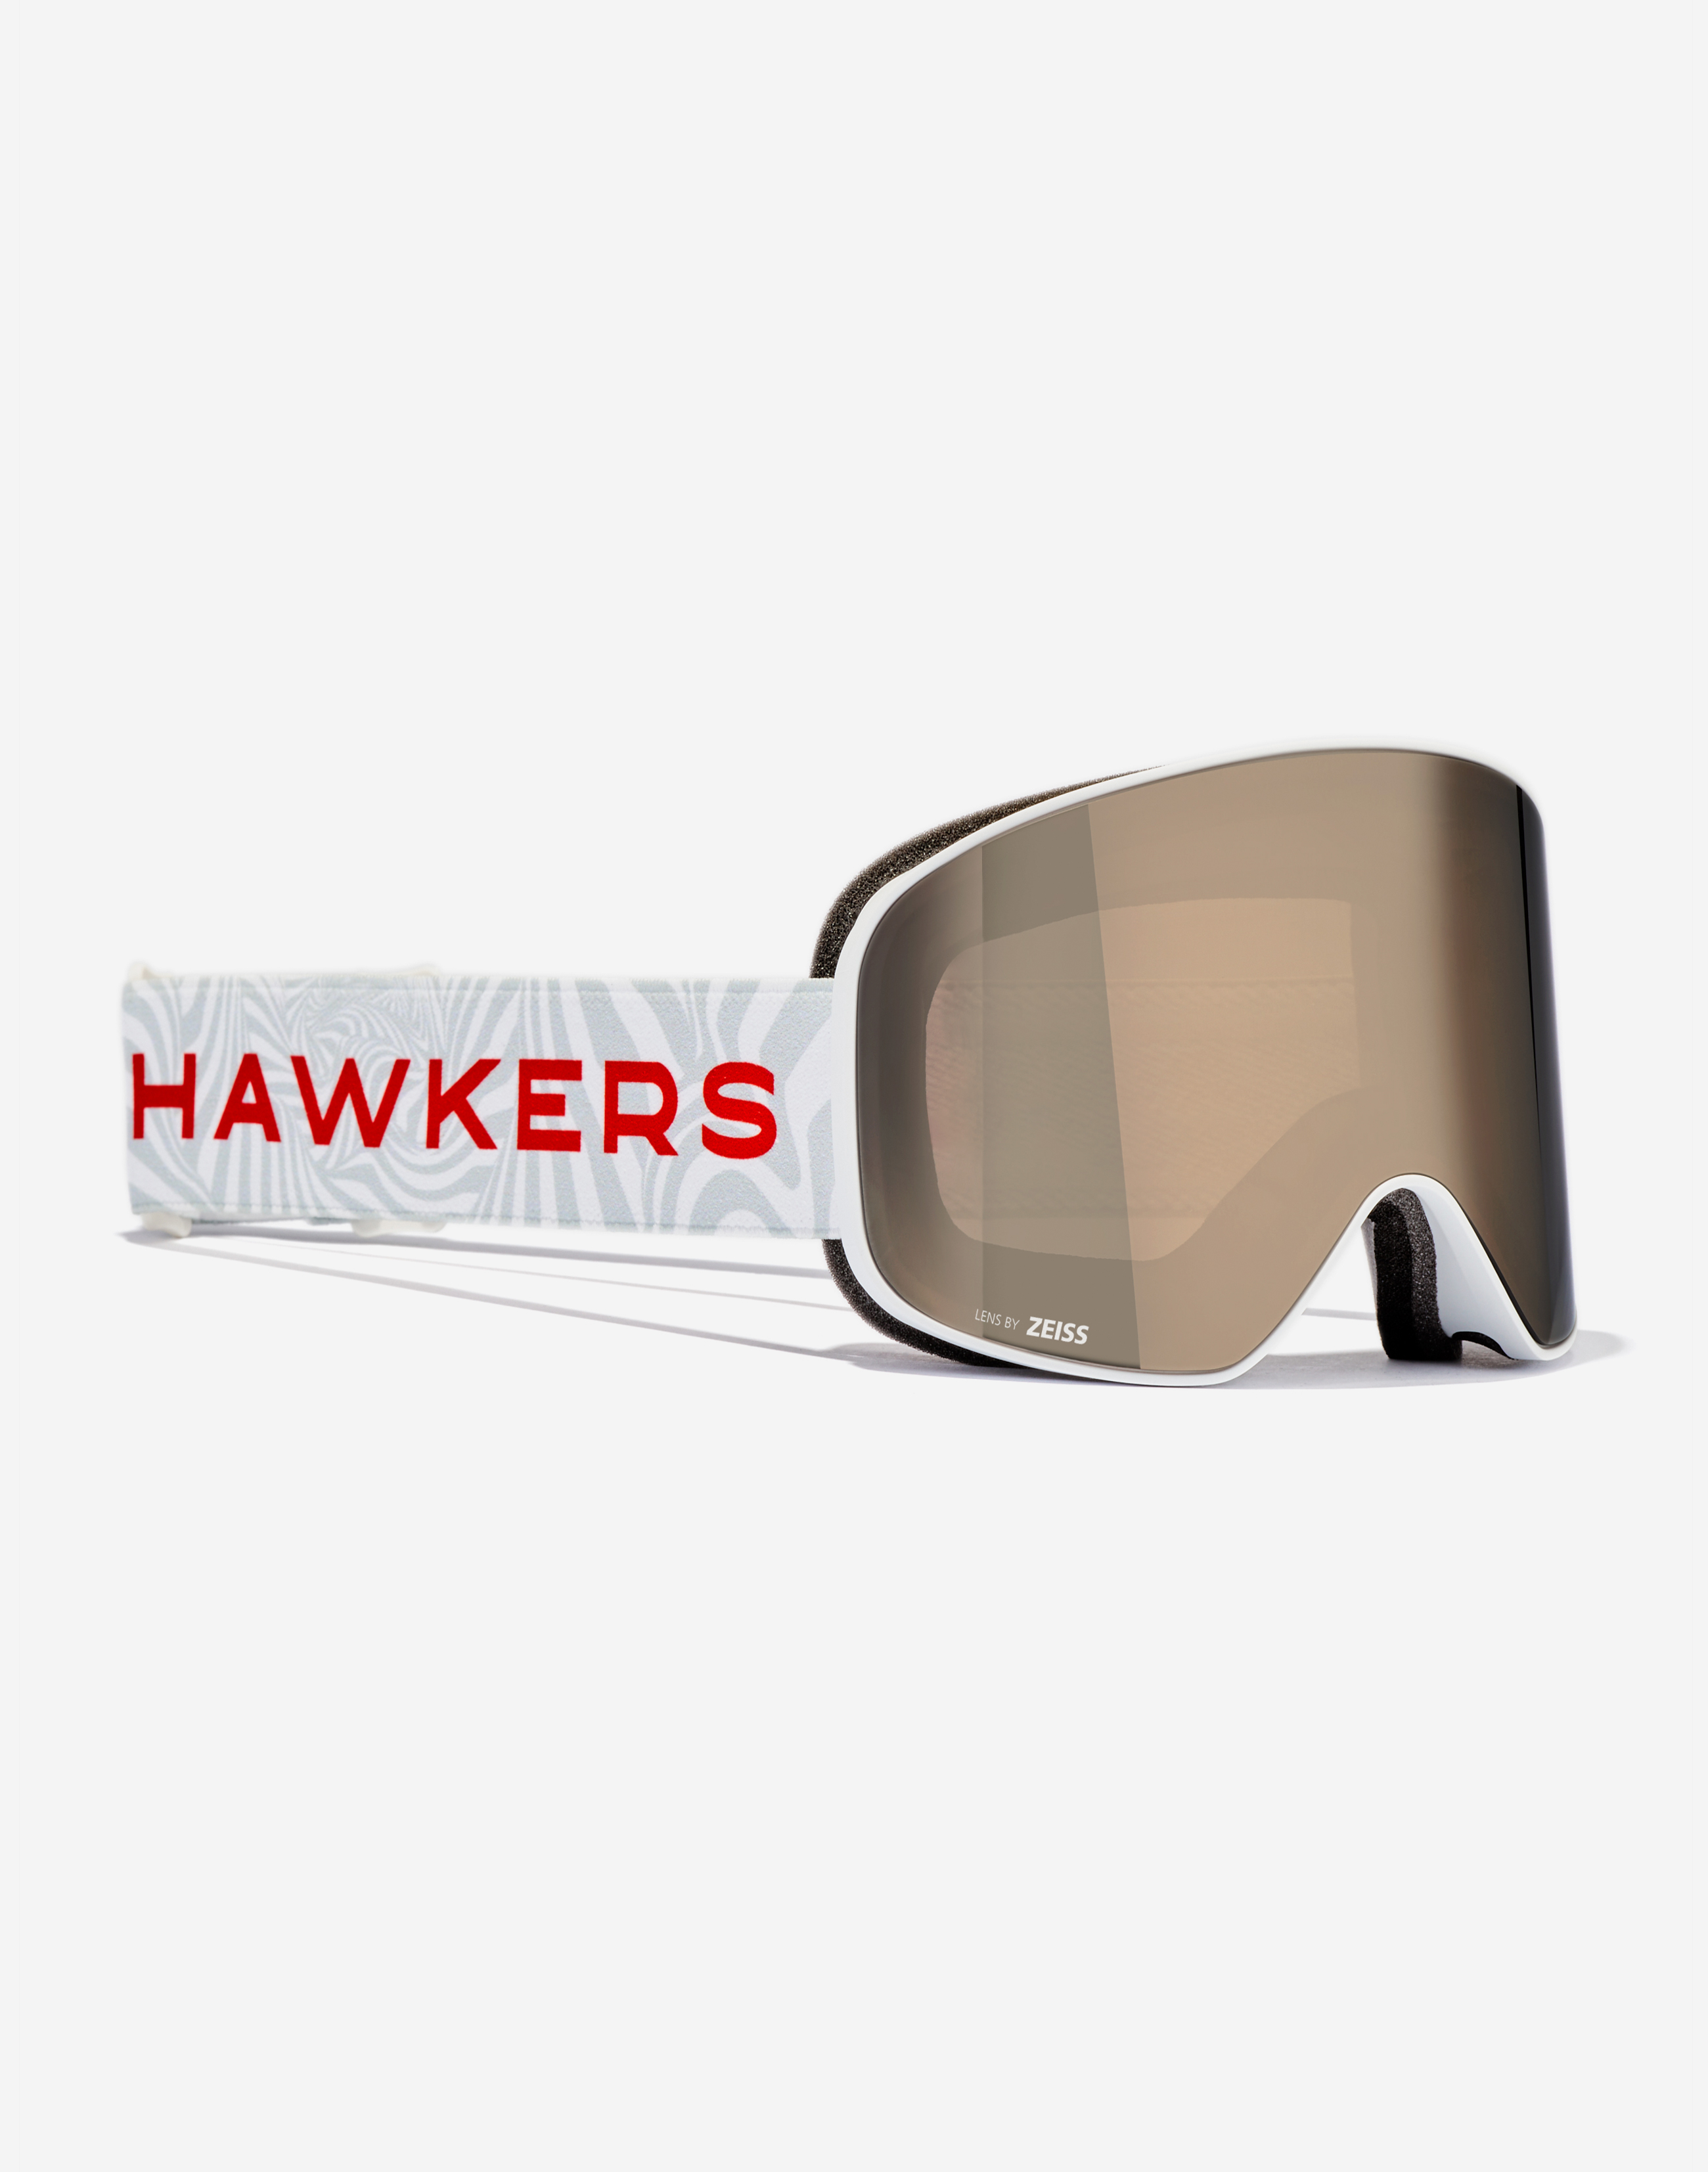 Hawkers HAWKERS X POLIMÁ - ARTIK master